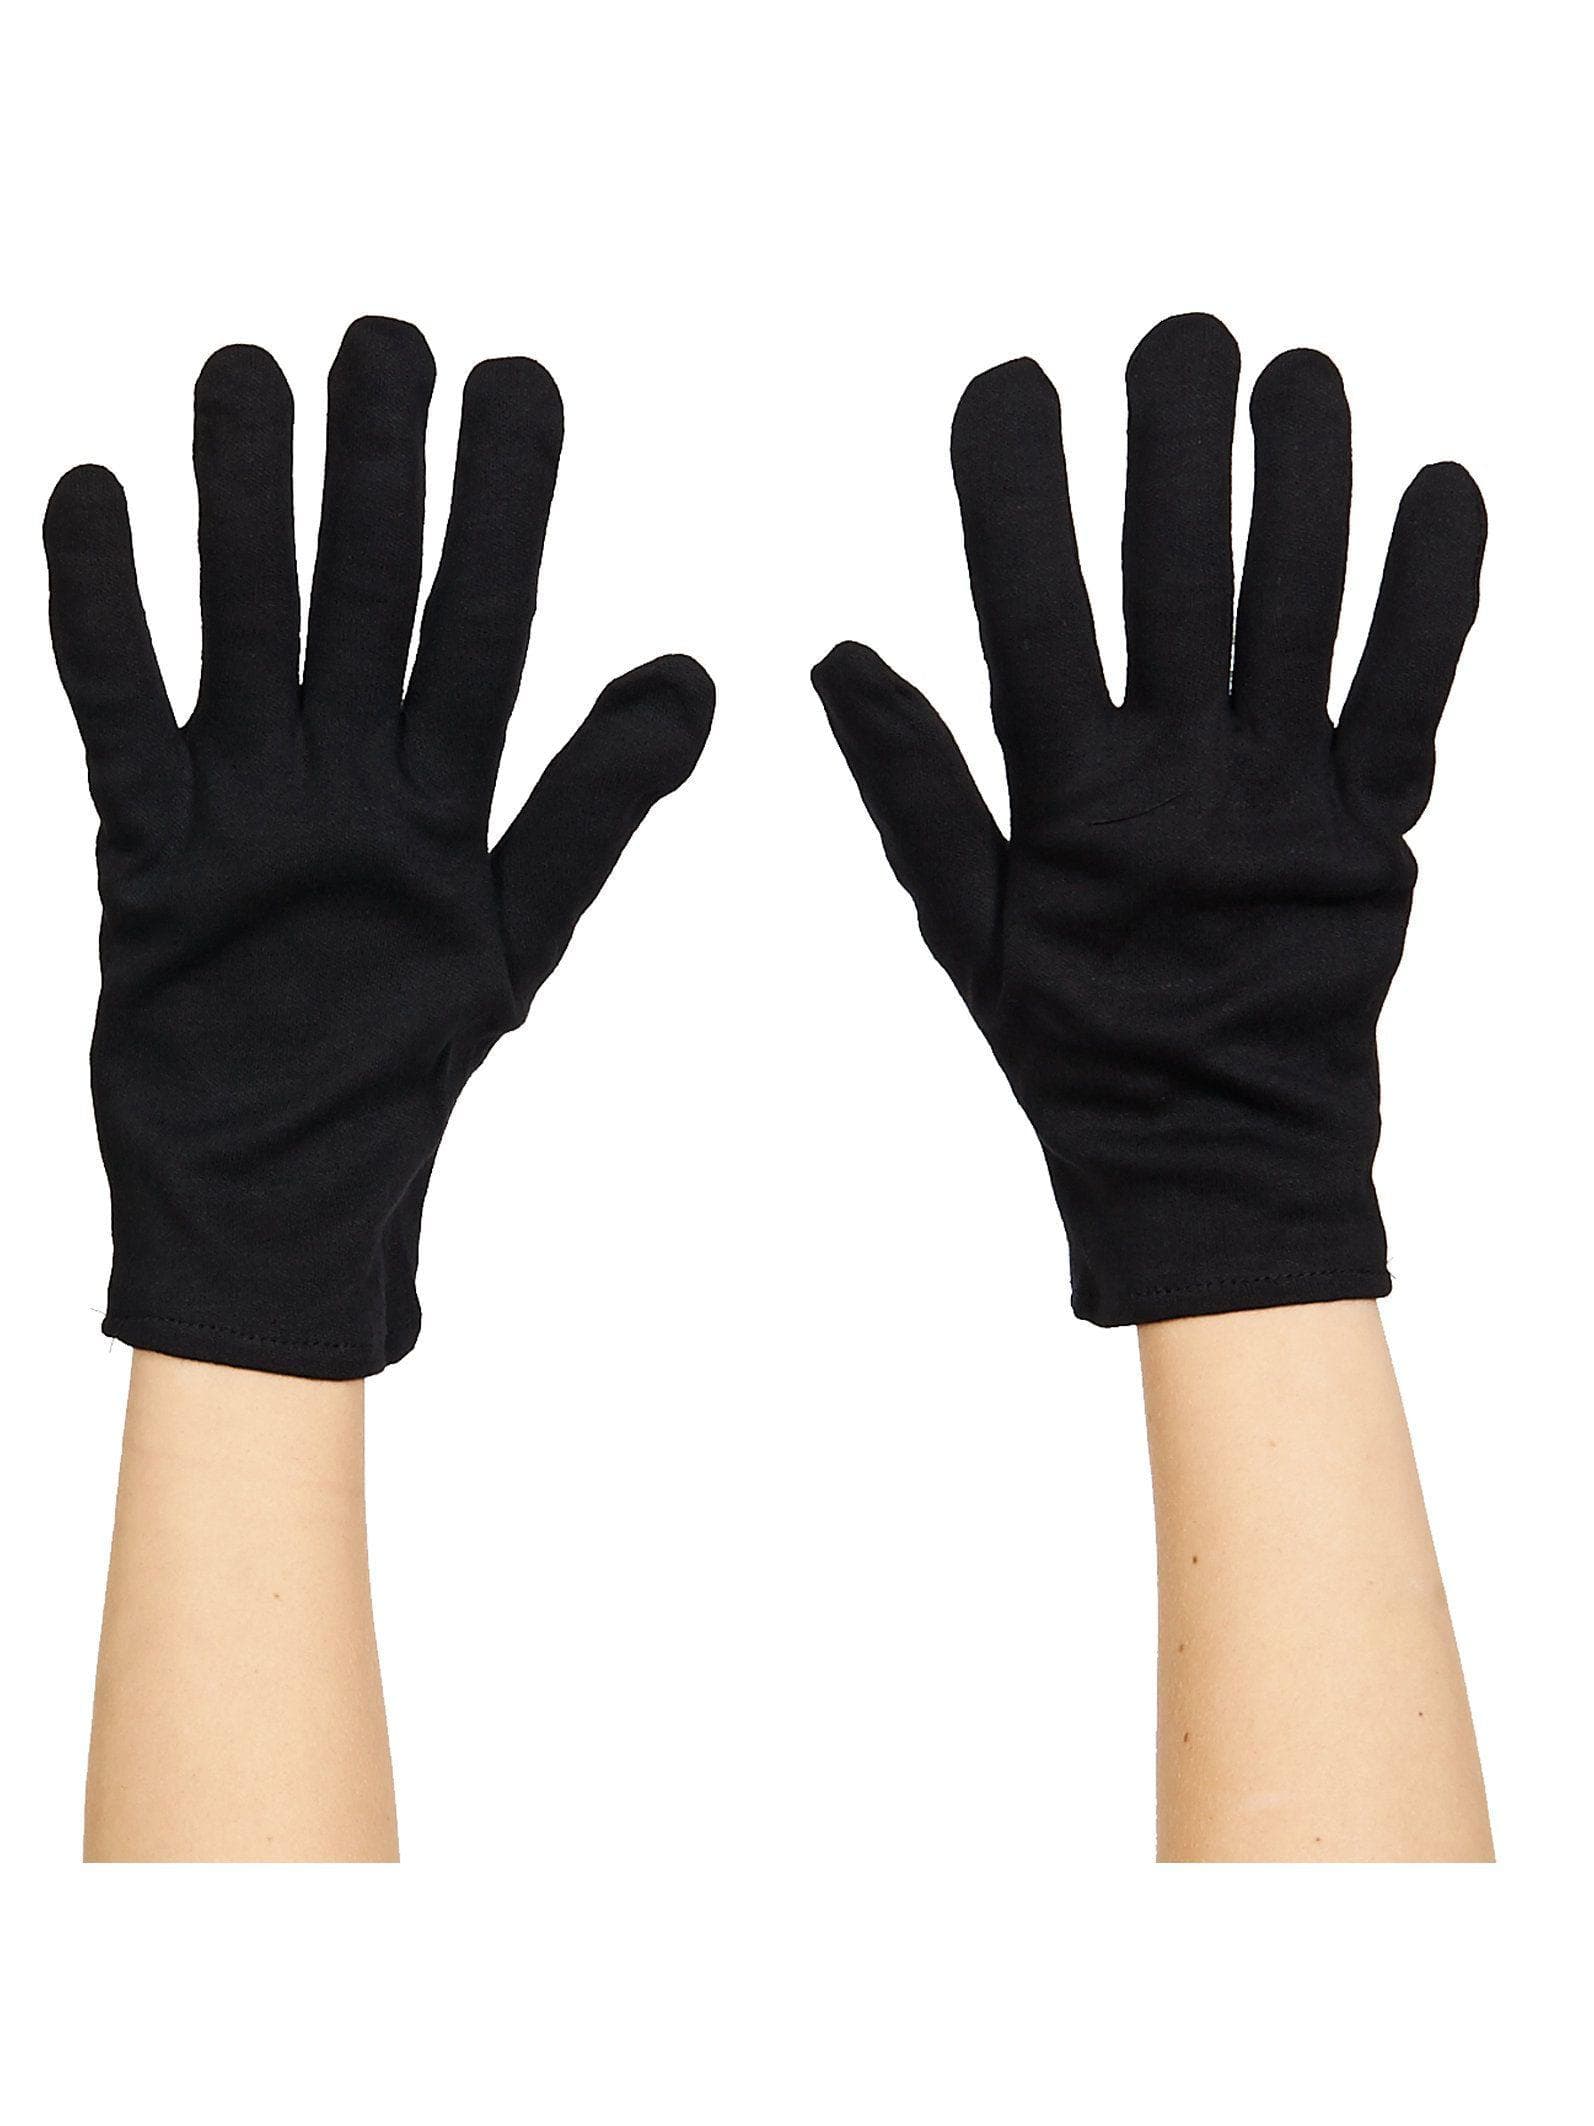 Adult Black Gloves - costumes.com